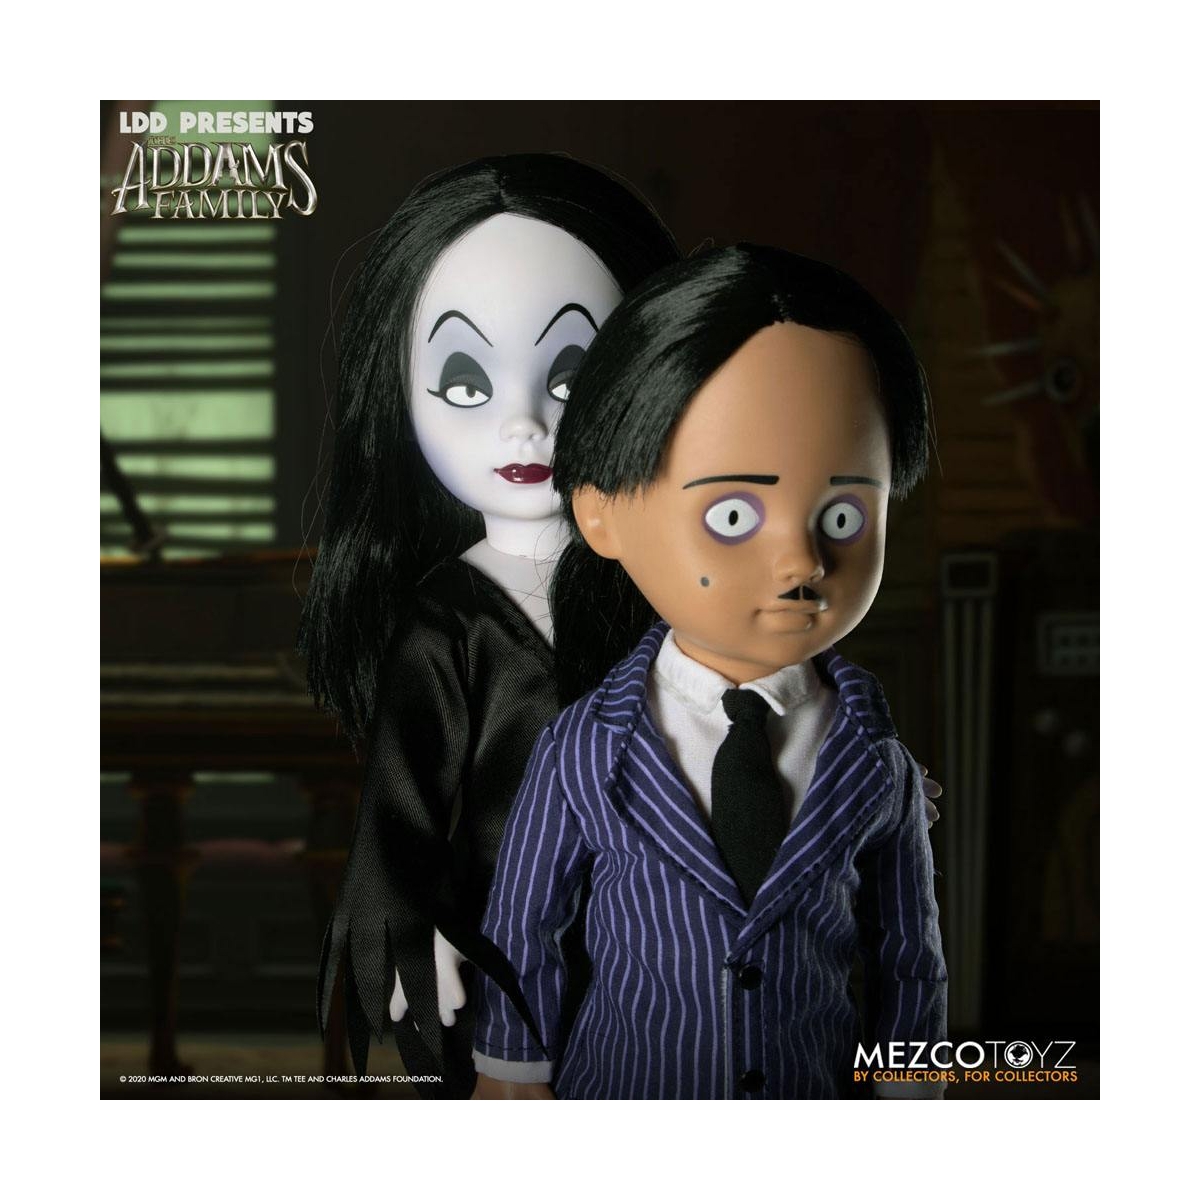 Wednesday Living Dead Dolls poupée Wednesday Addams Mezco Toys - France  Figurines